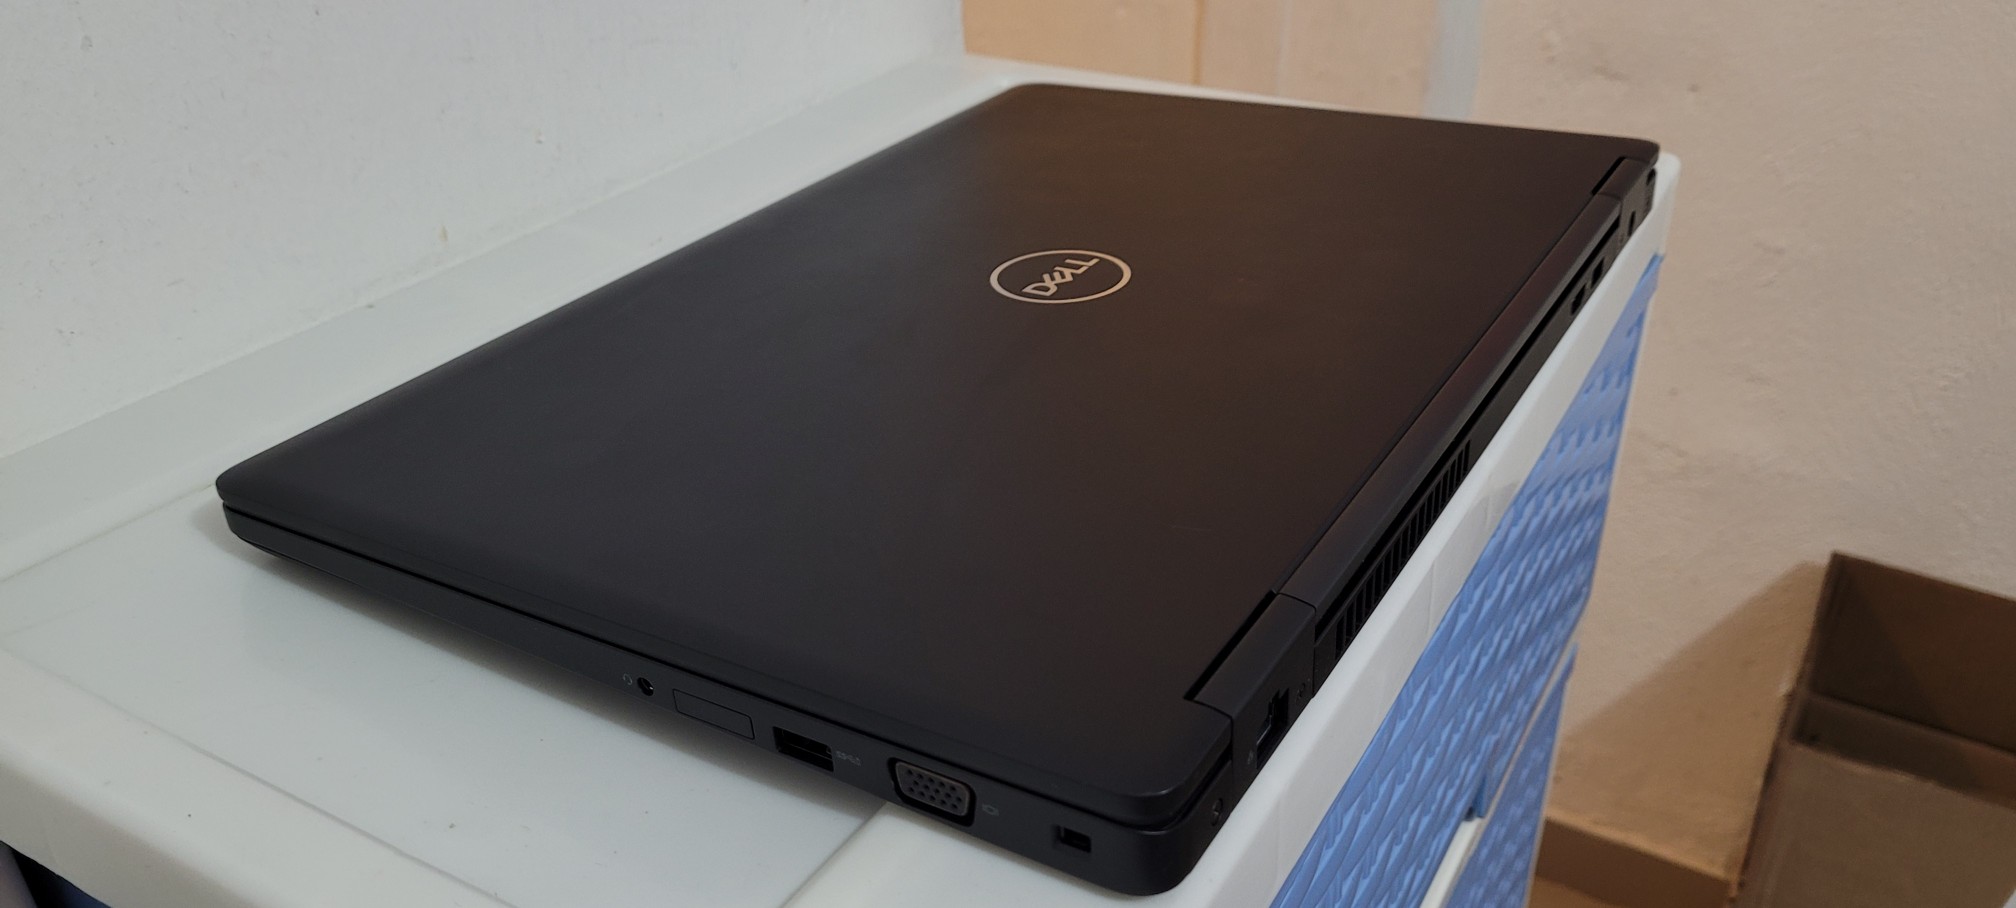 computadoras y laptops - Dell 5570 17 Pulg Core i7 6ta Ram 16gb Video intel 8gb Y Aty Radeon R7 2gb 2